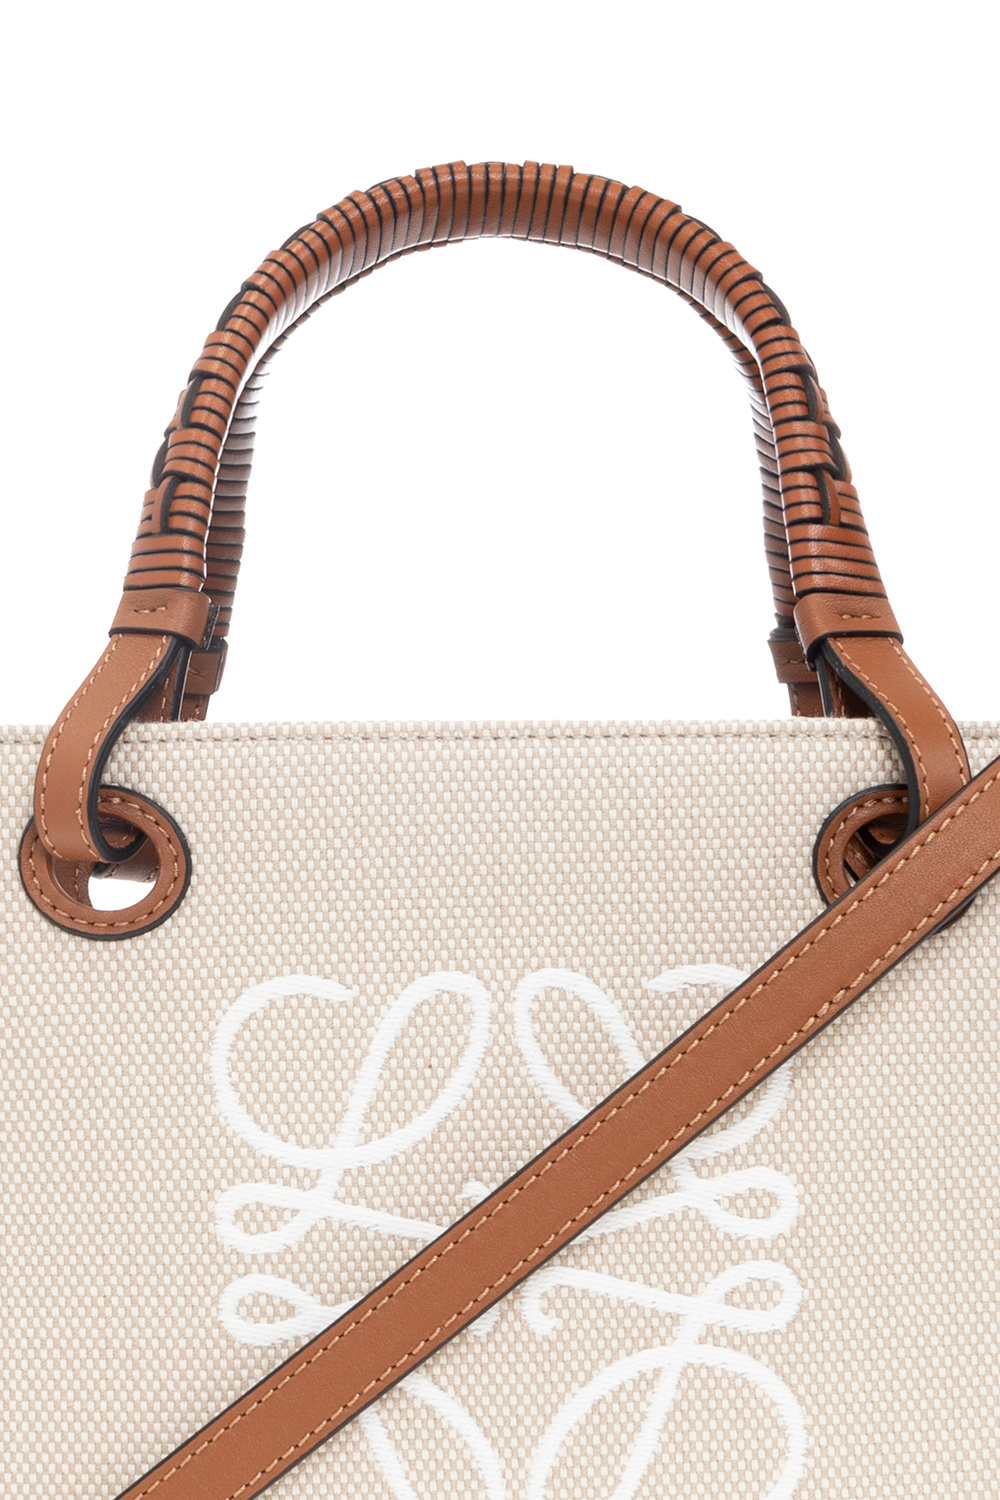 Brand New Loewe x Spirited Away Small Puzzle Bag Susuwatari Brown Leather  Bag